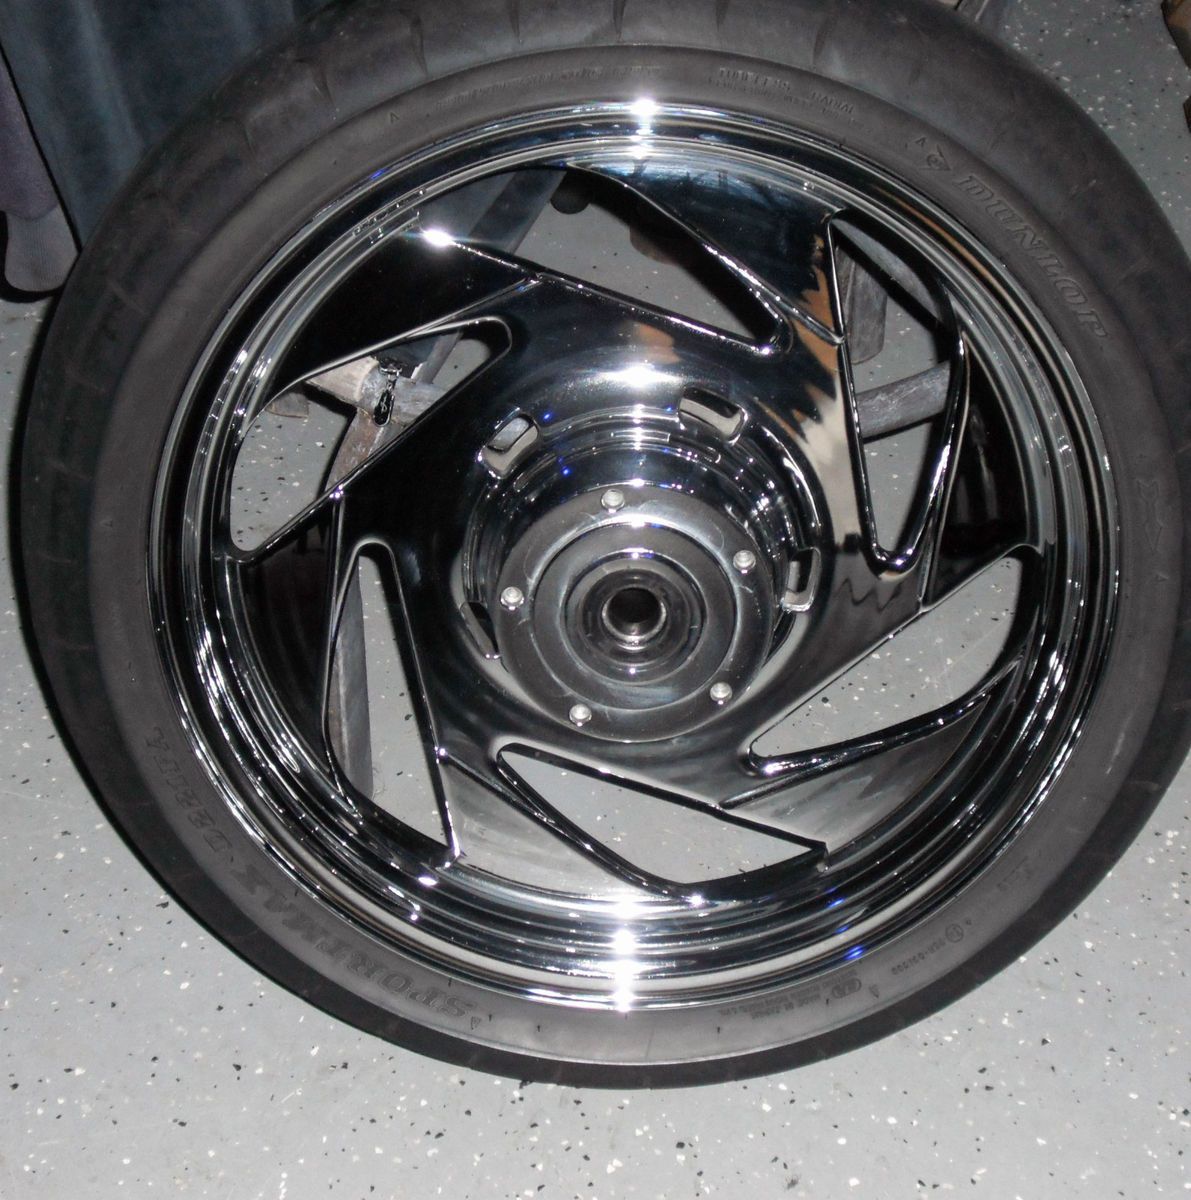  Boulevard M109r Vzr 1800 Chrome Rims Front Rear Wheels are Stock OEM